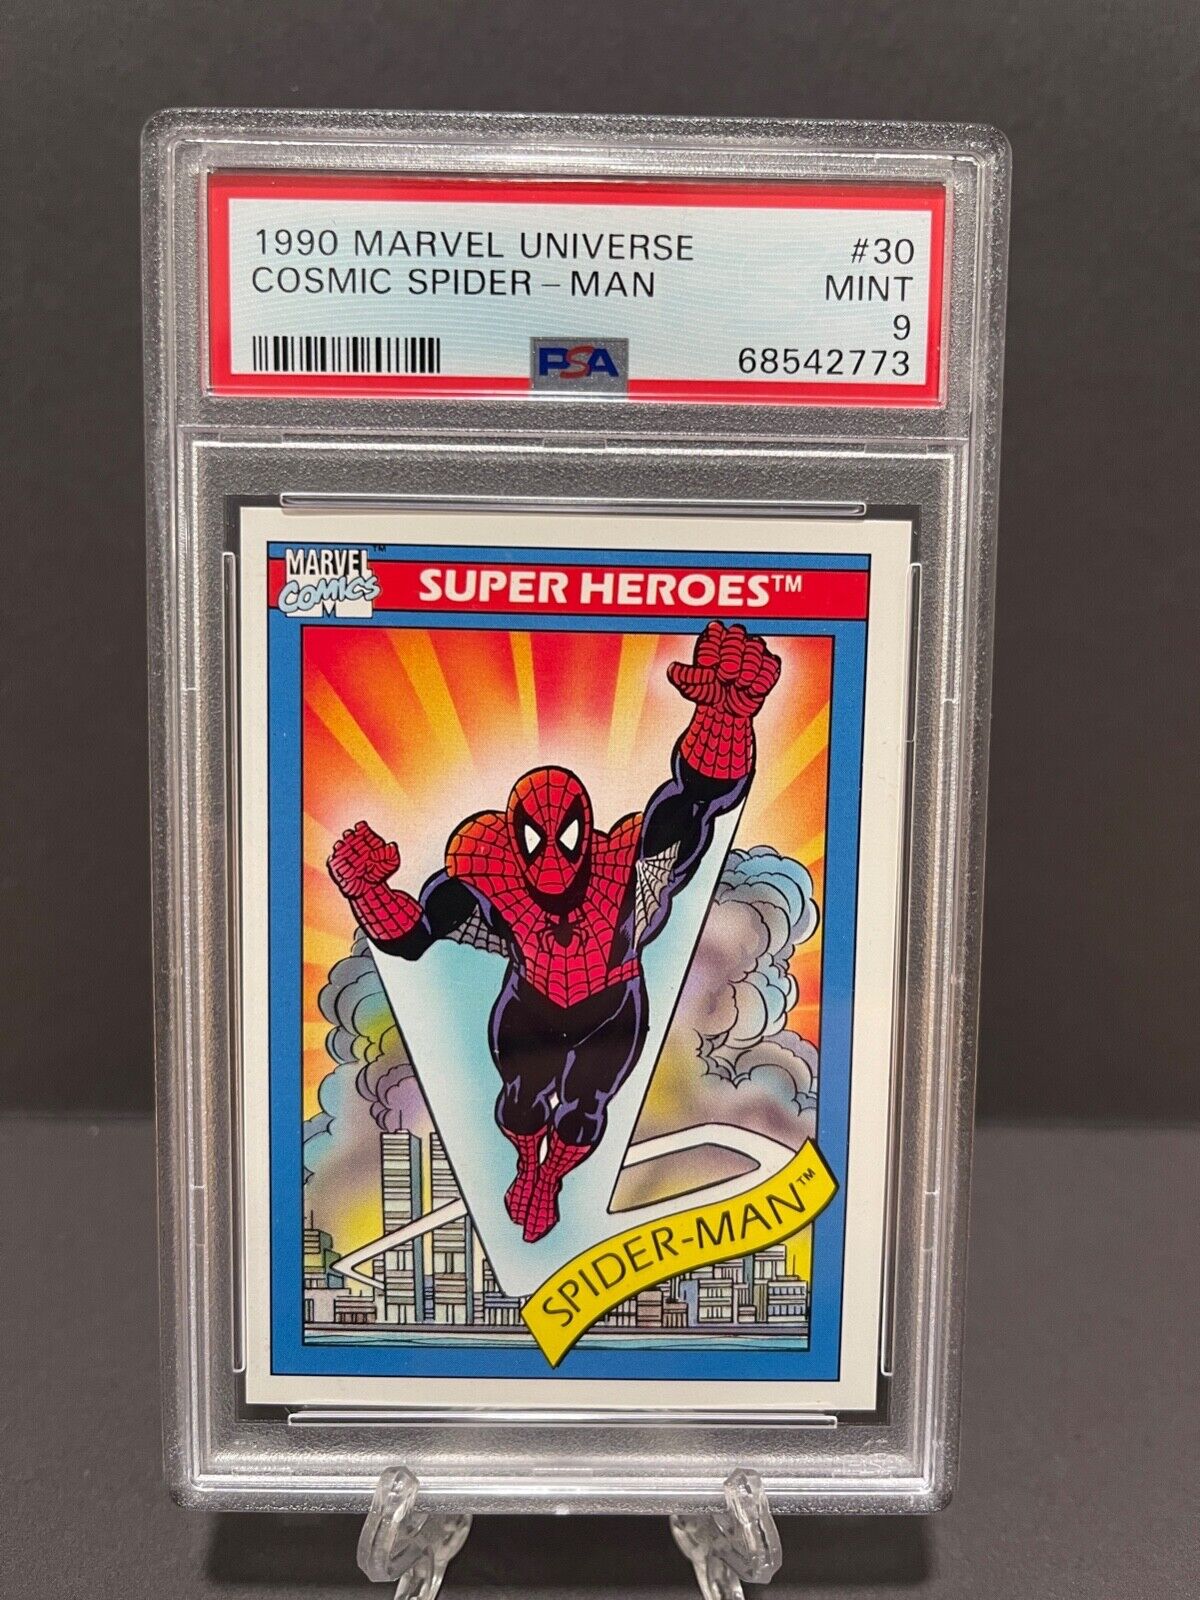 COSMIC SPIDER-MAN 1990 Marvel Universe PSA 9 Mint Graded 2022 SUPER HEROES #30